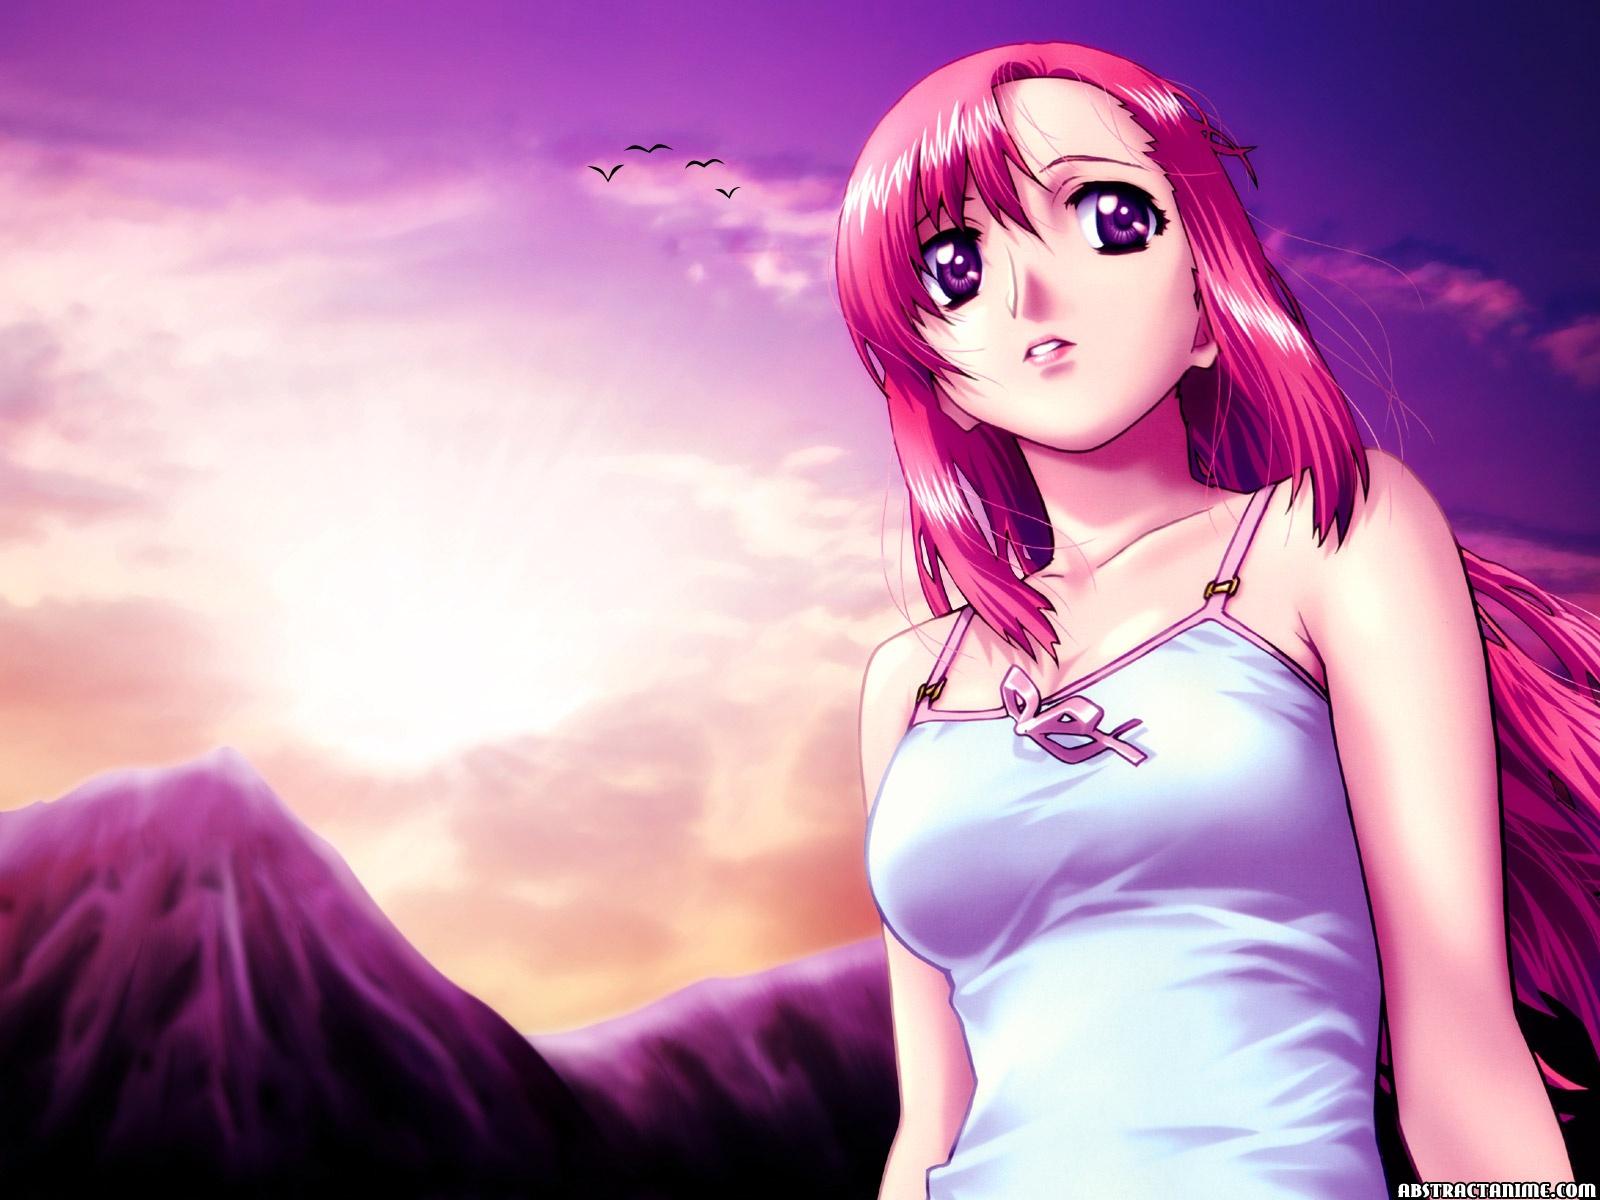 Anime Girl 91 Wallpaper in jpg format for free download